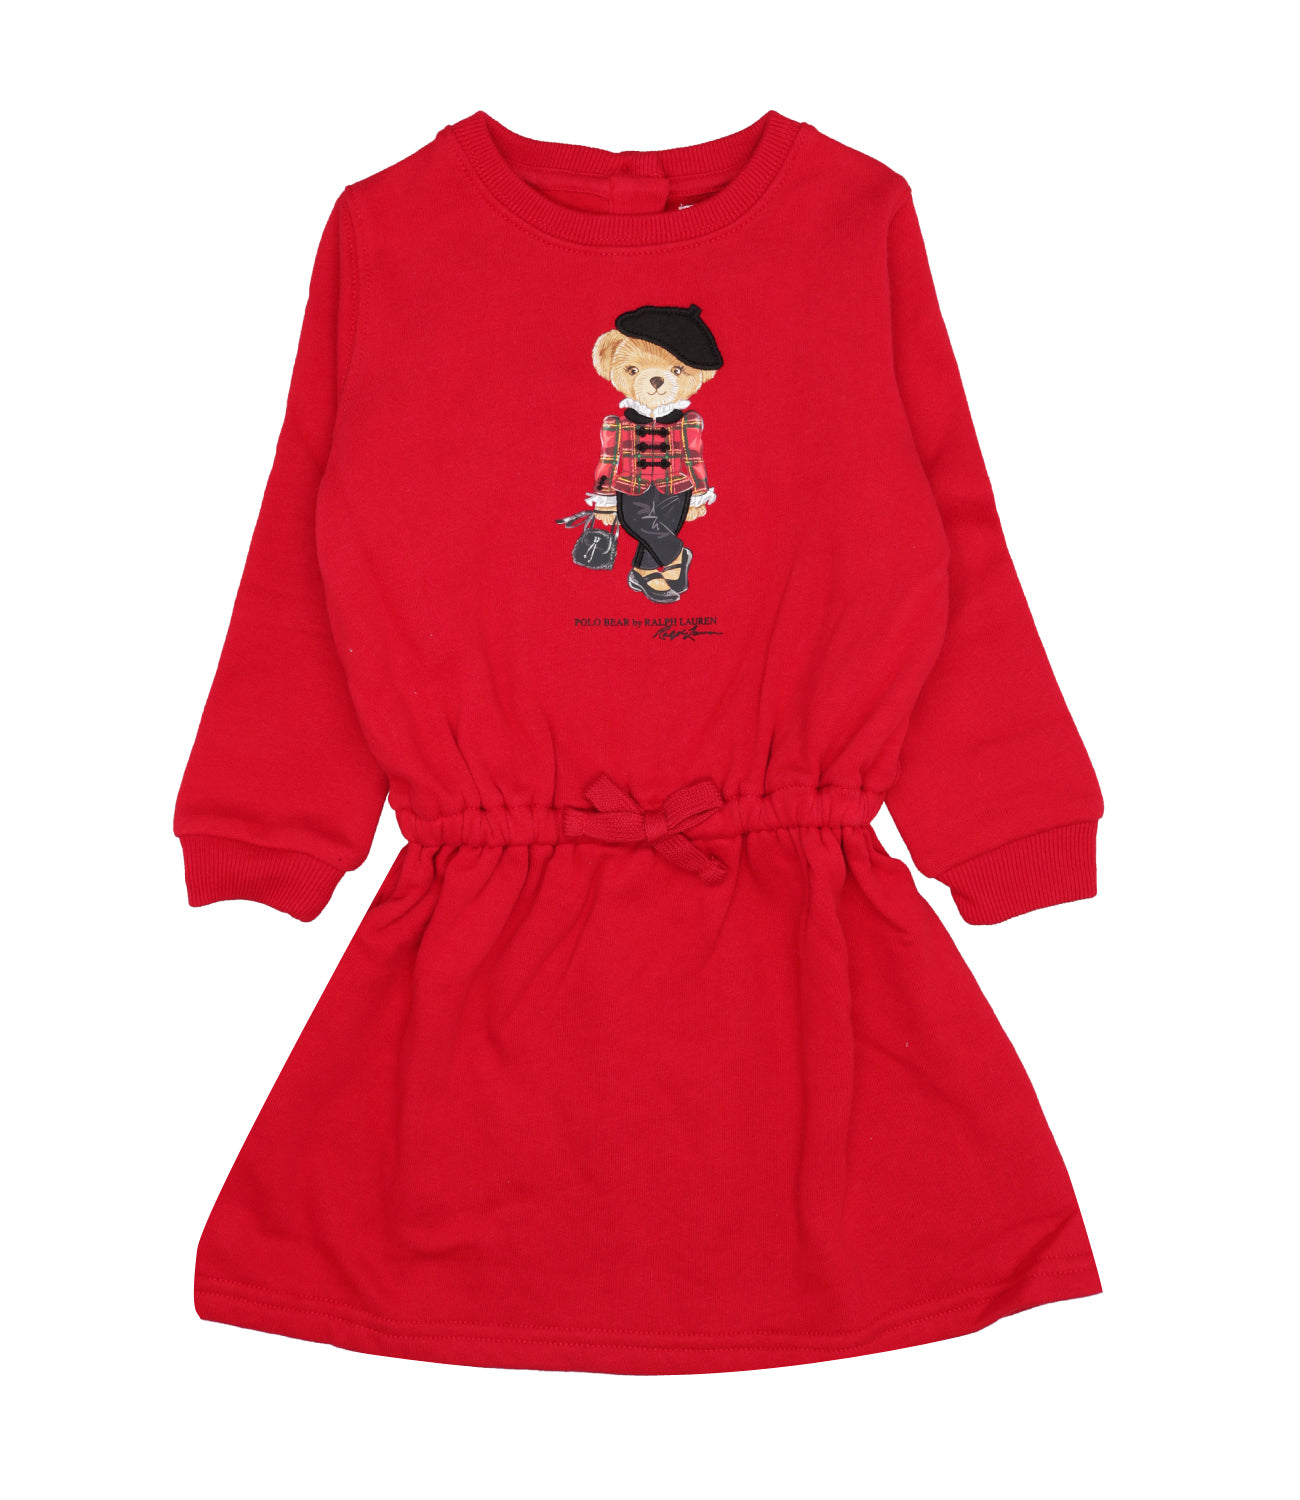 Ralph Lauren Childrenswear | Red Dress